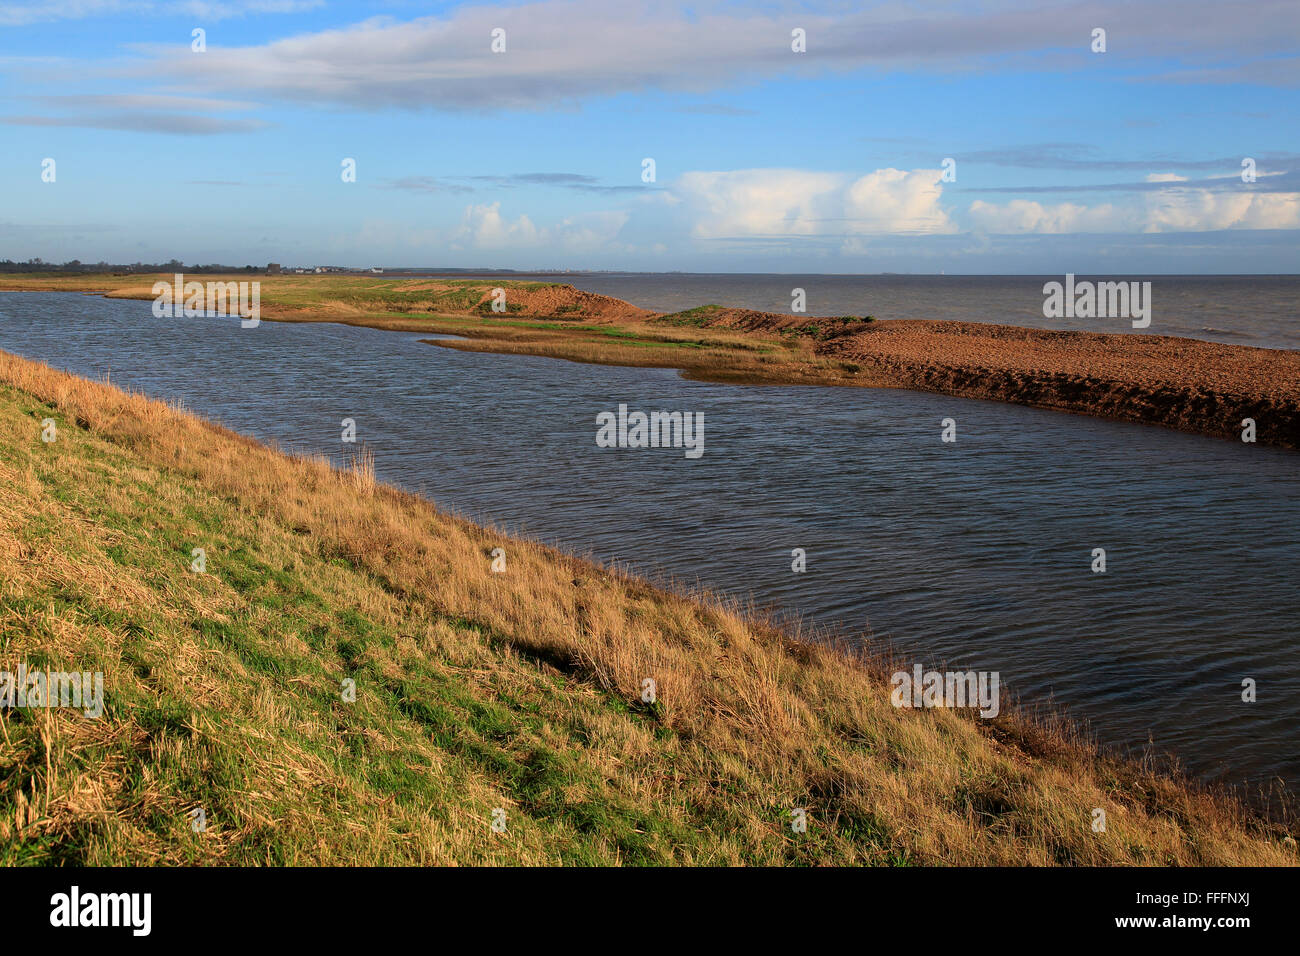 Rapid erosion of shingle bay bar landform on North Sea coast, Hollesley Bay, Bawdsey, Suffolk, England, UK Stock Photo